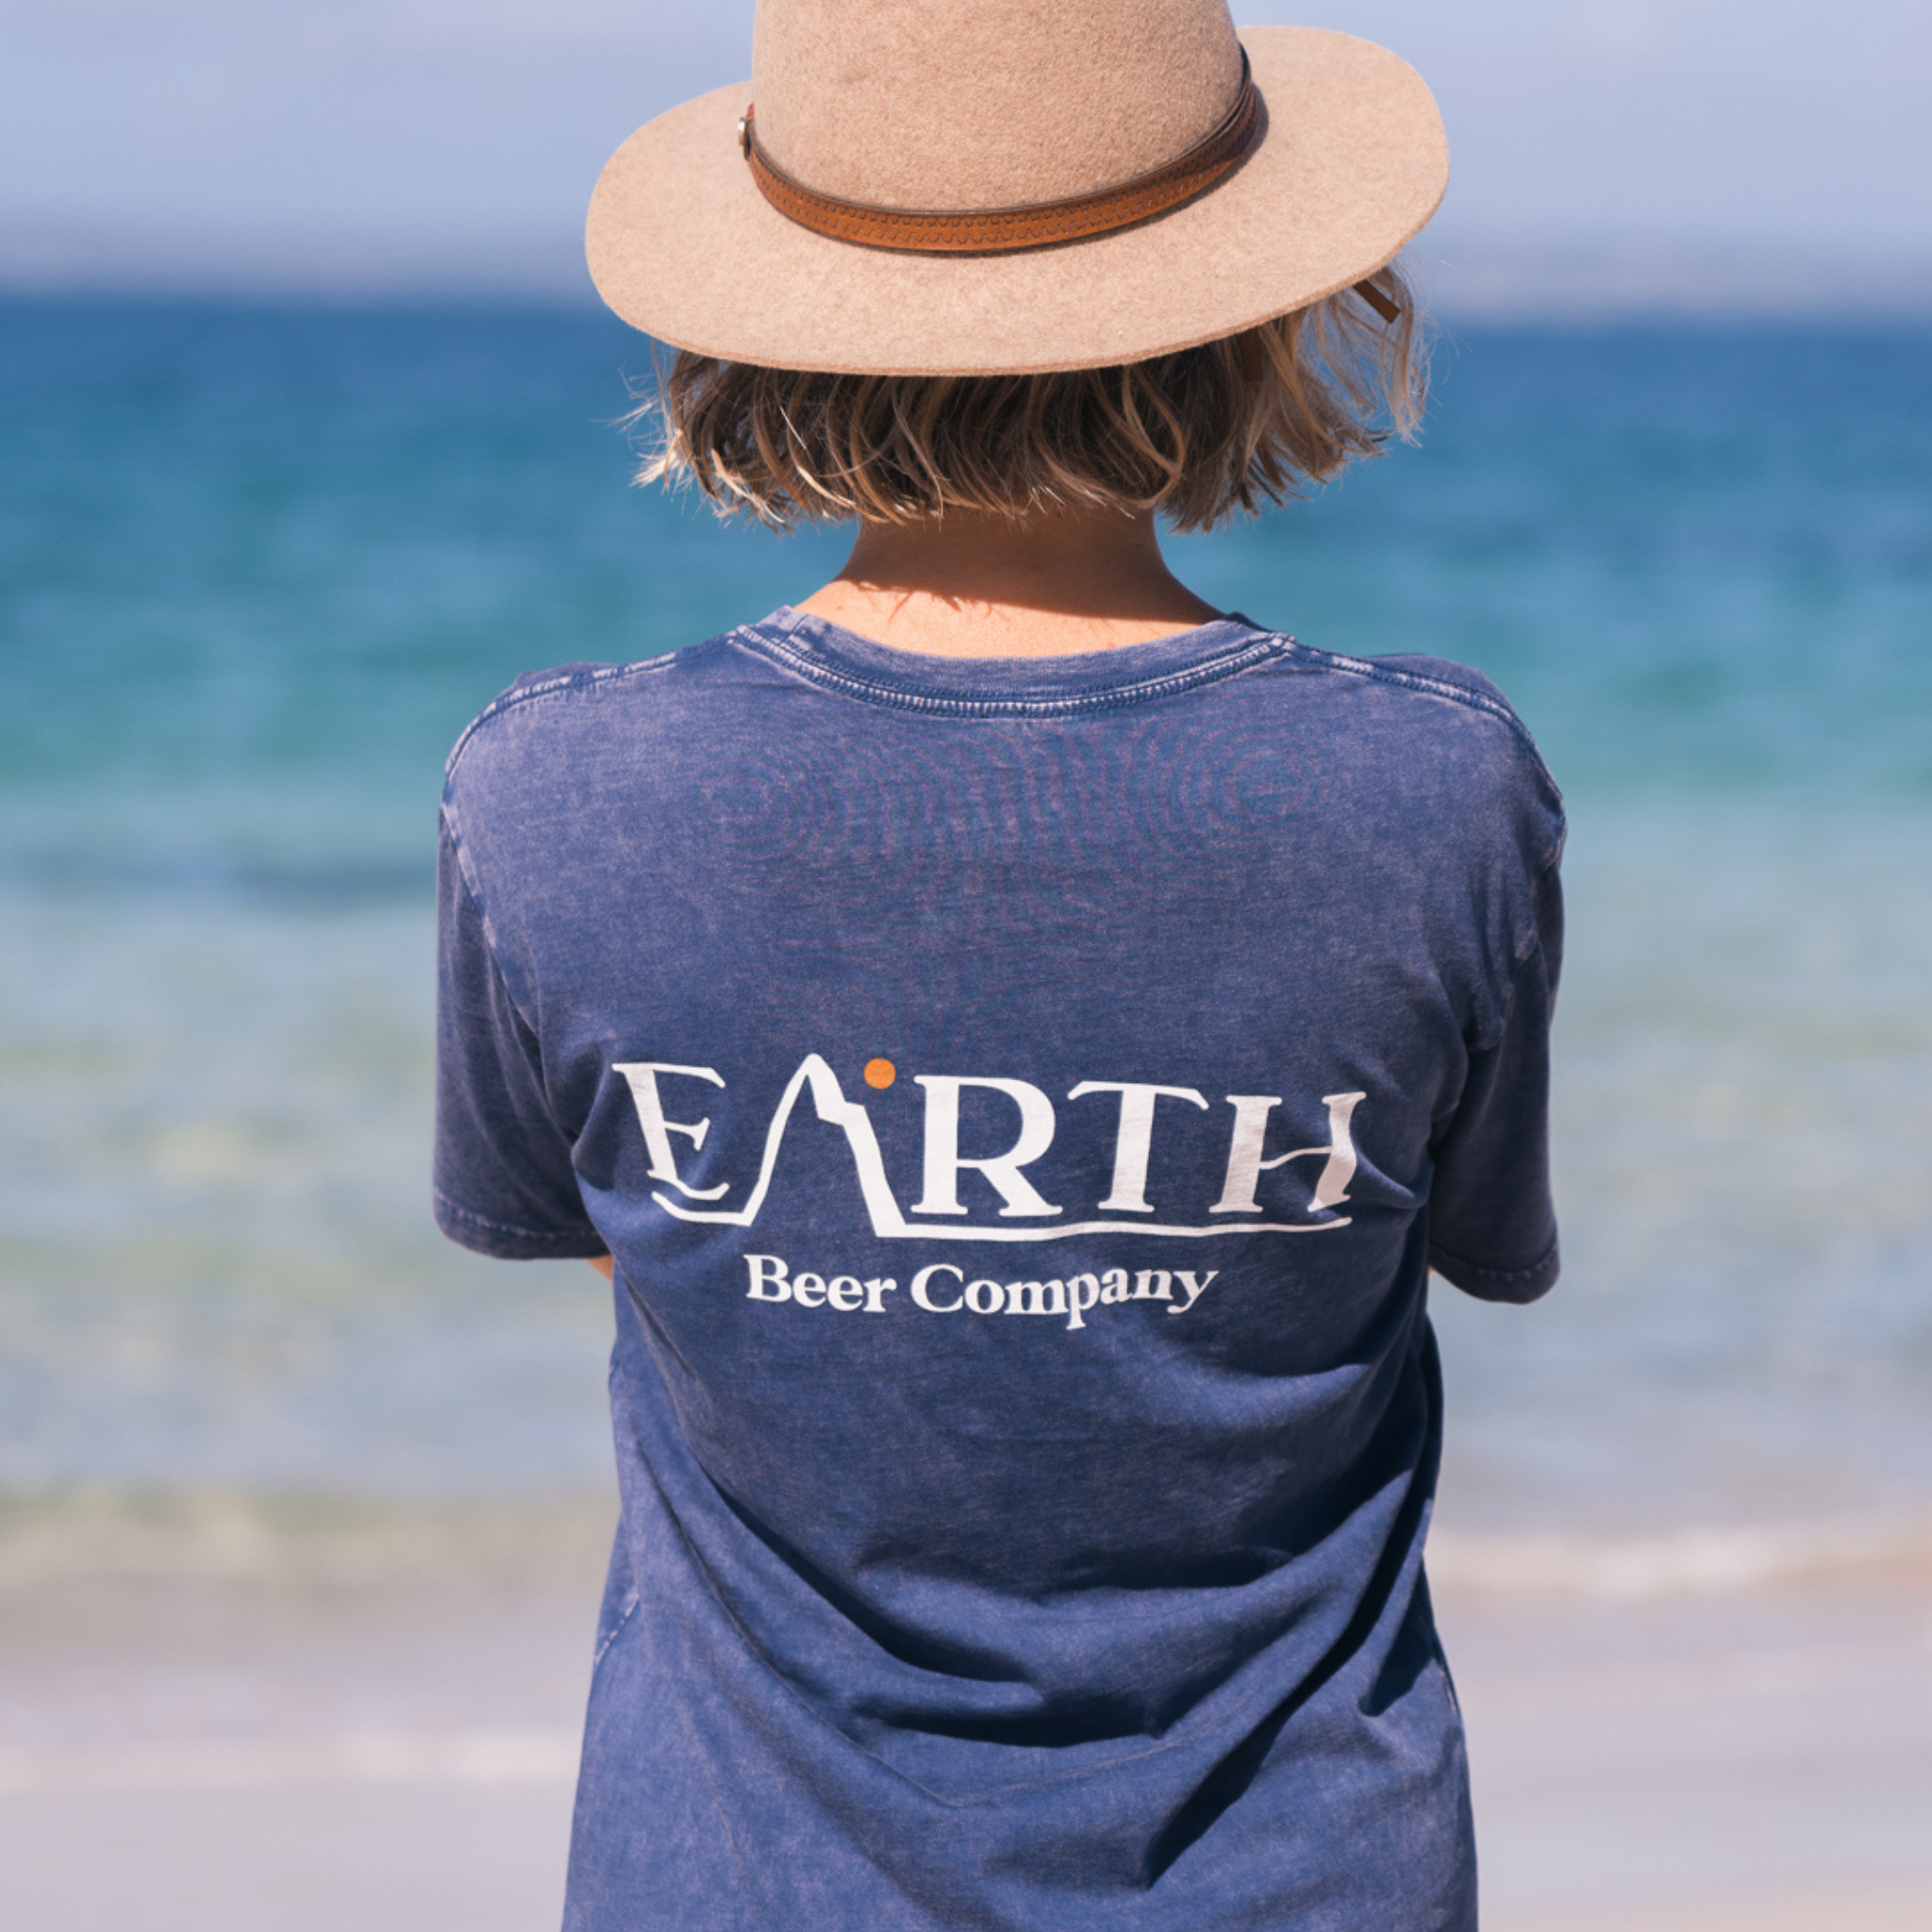 Earth Beer Company t-shirt merchandise